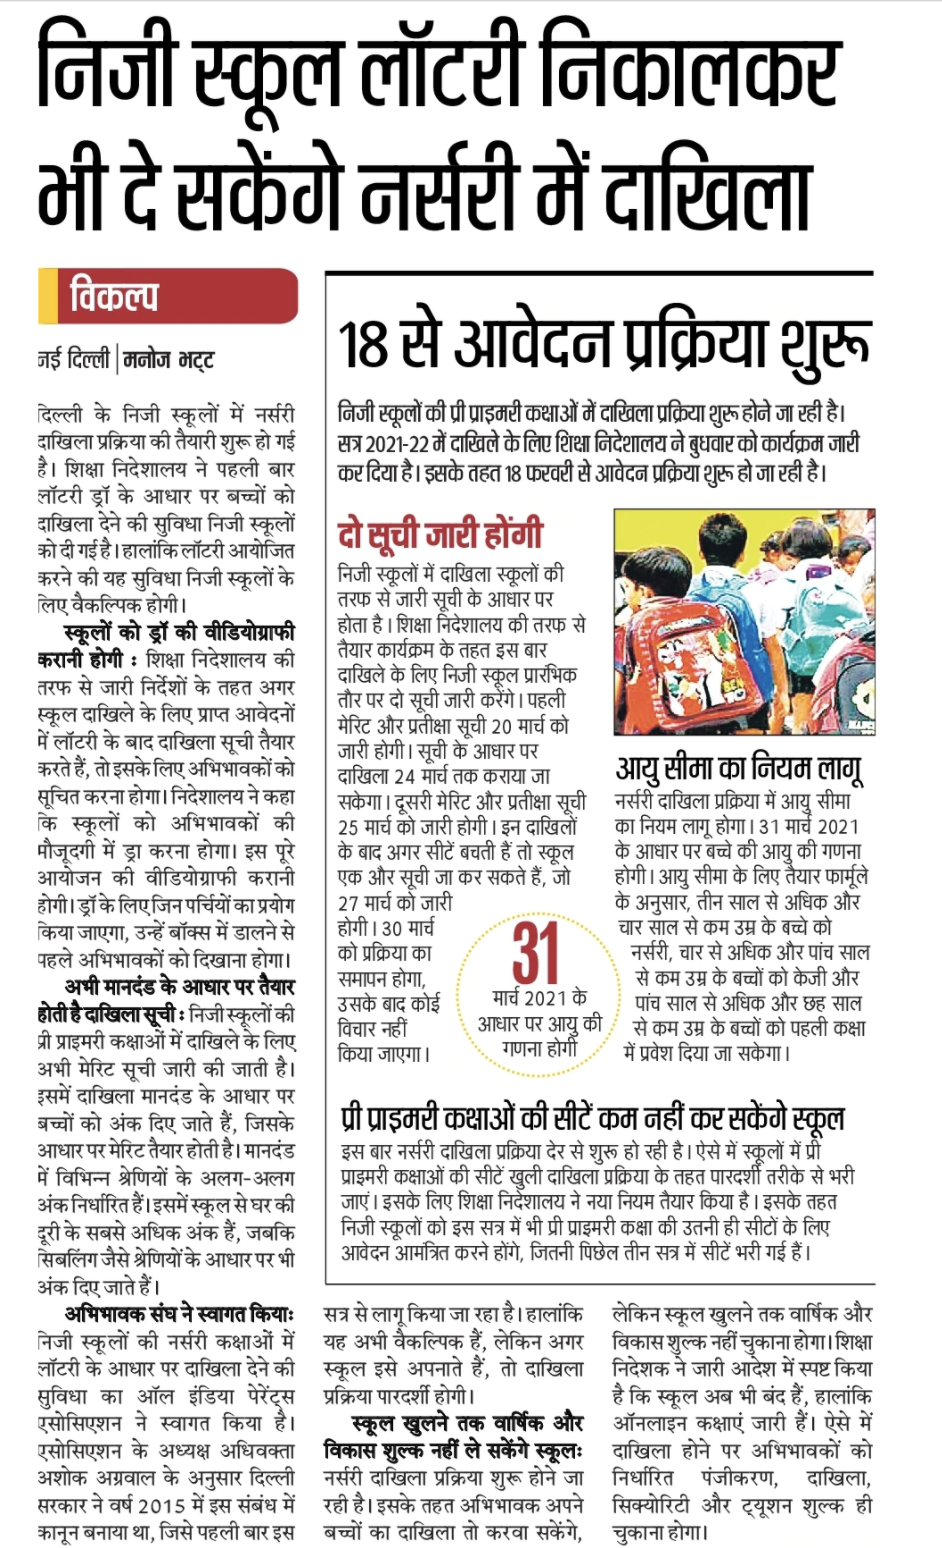 Delhi Nursery School Lottery Draw Result 21 Merit List Latest News